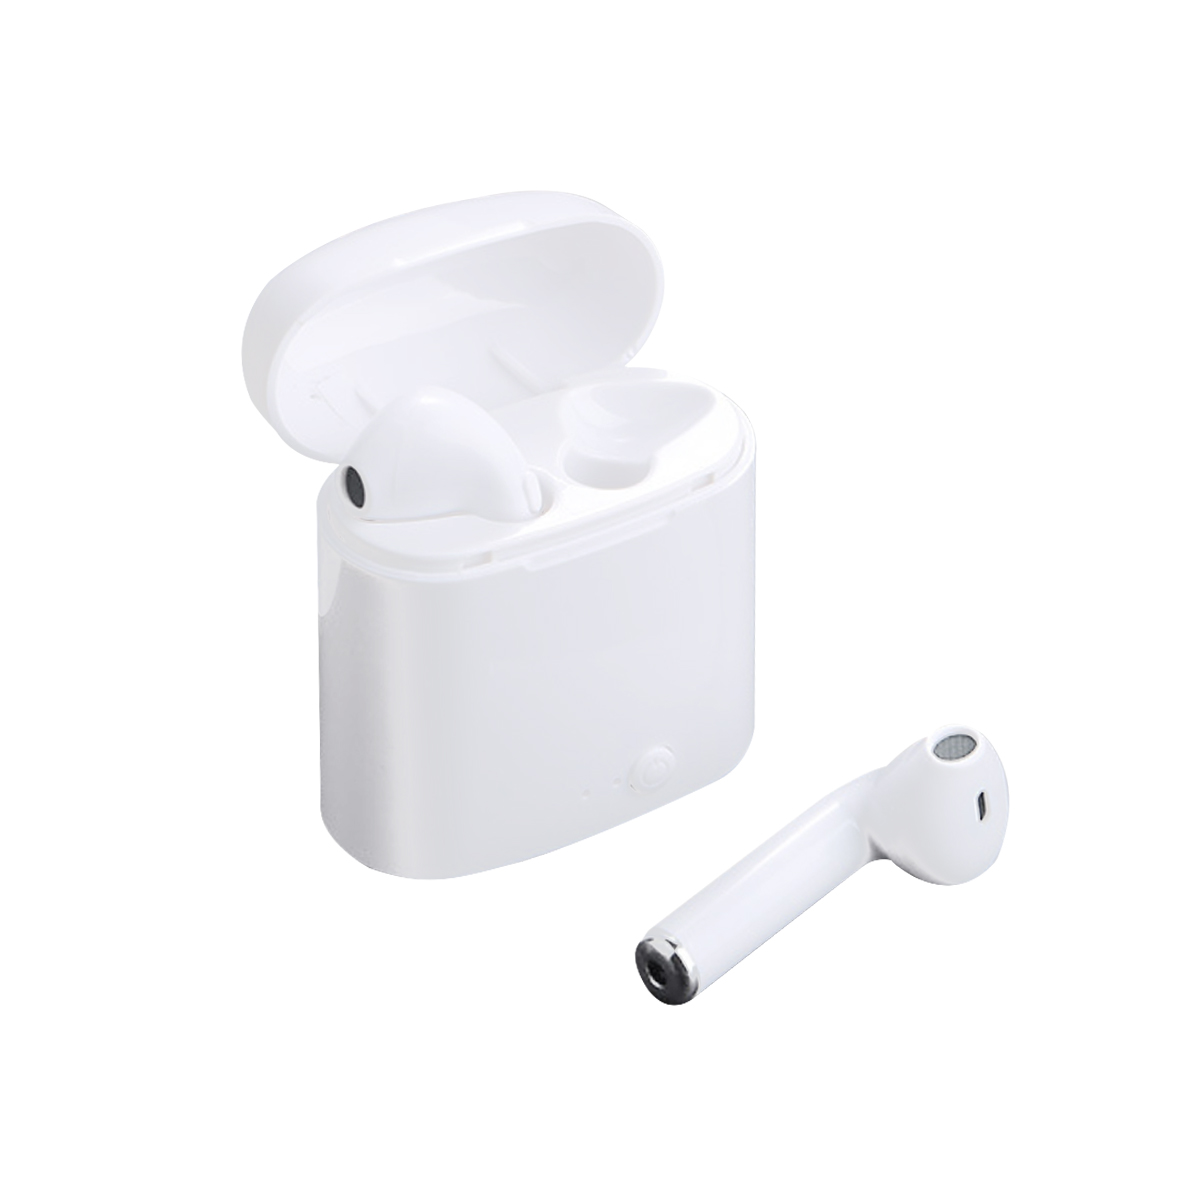 TWS Wireless Bluetooth Earbuds